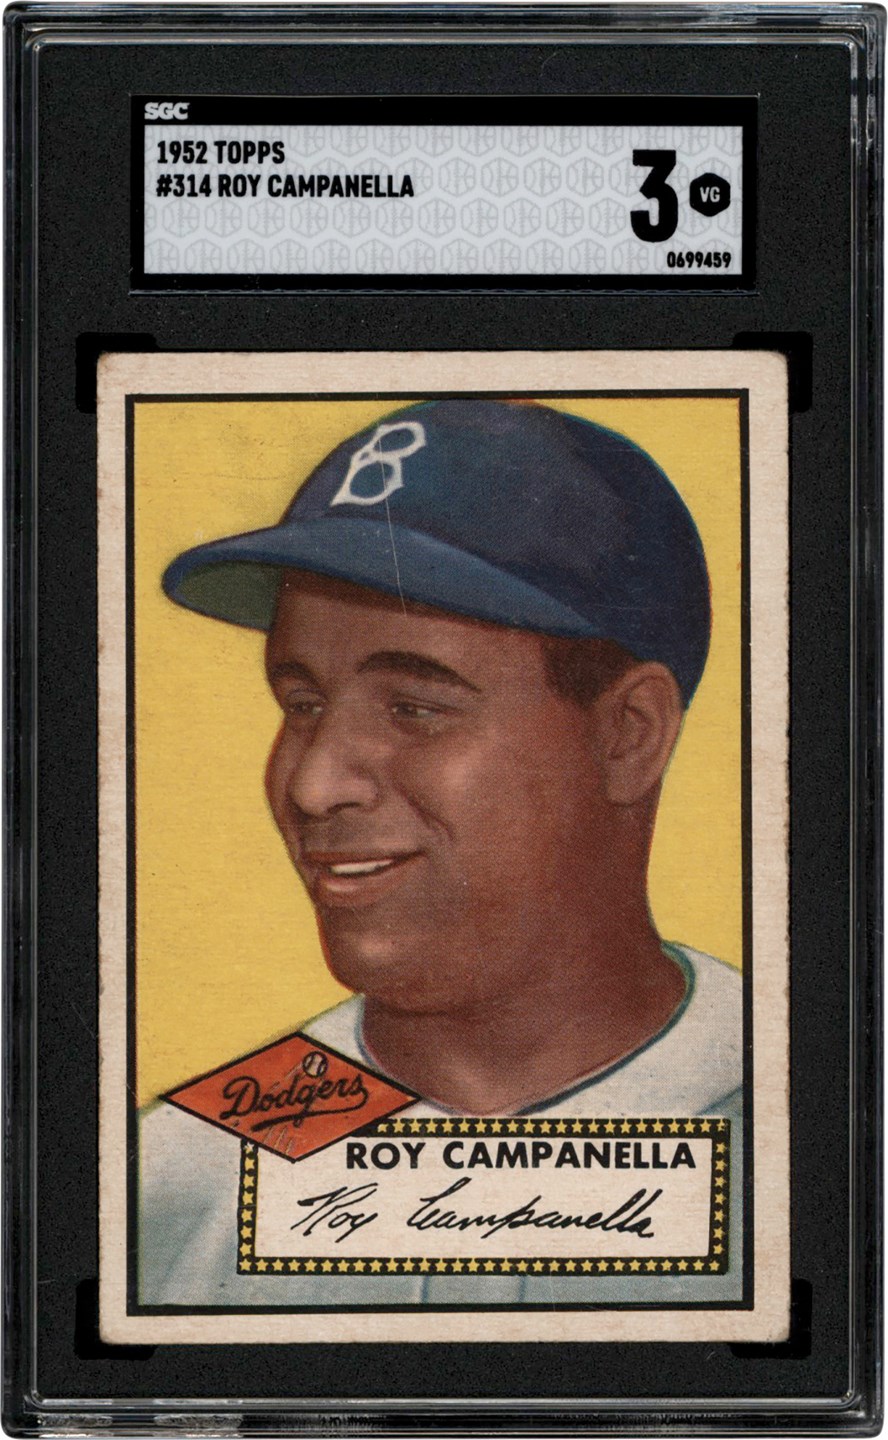 1952 Topps Baseball #314 Roy Campanella SGC VG 3